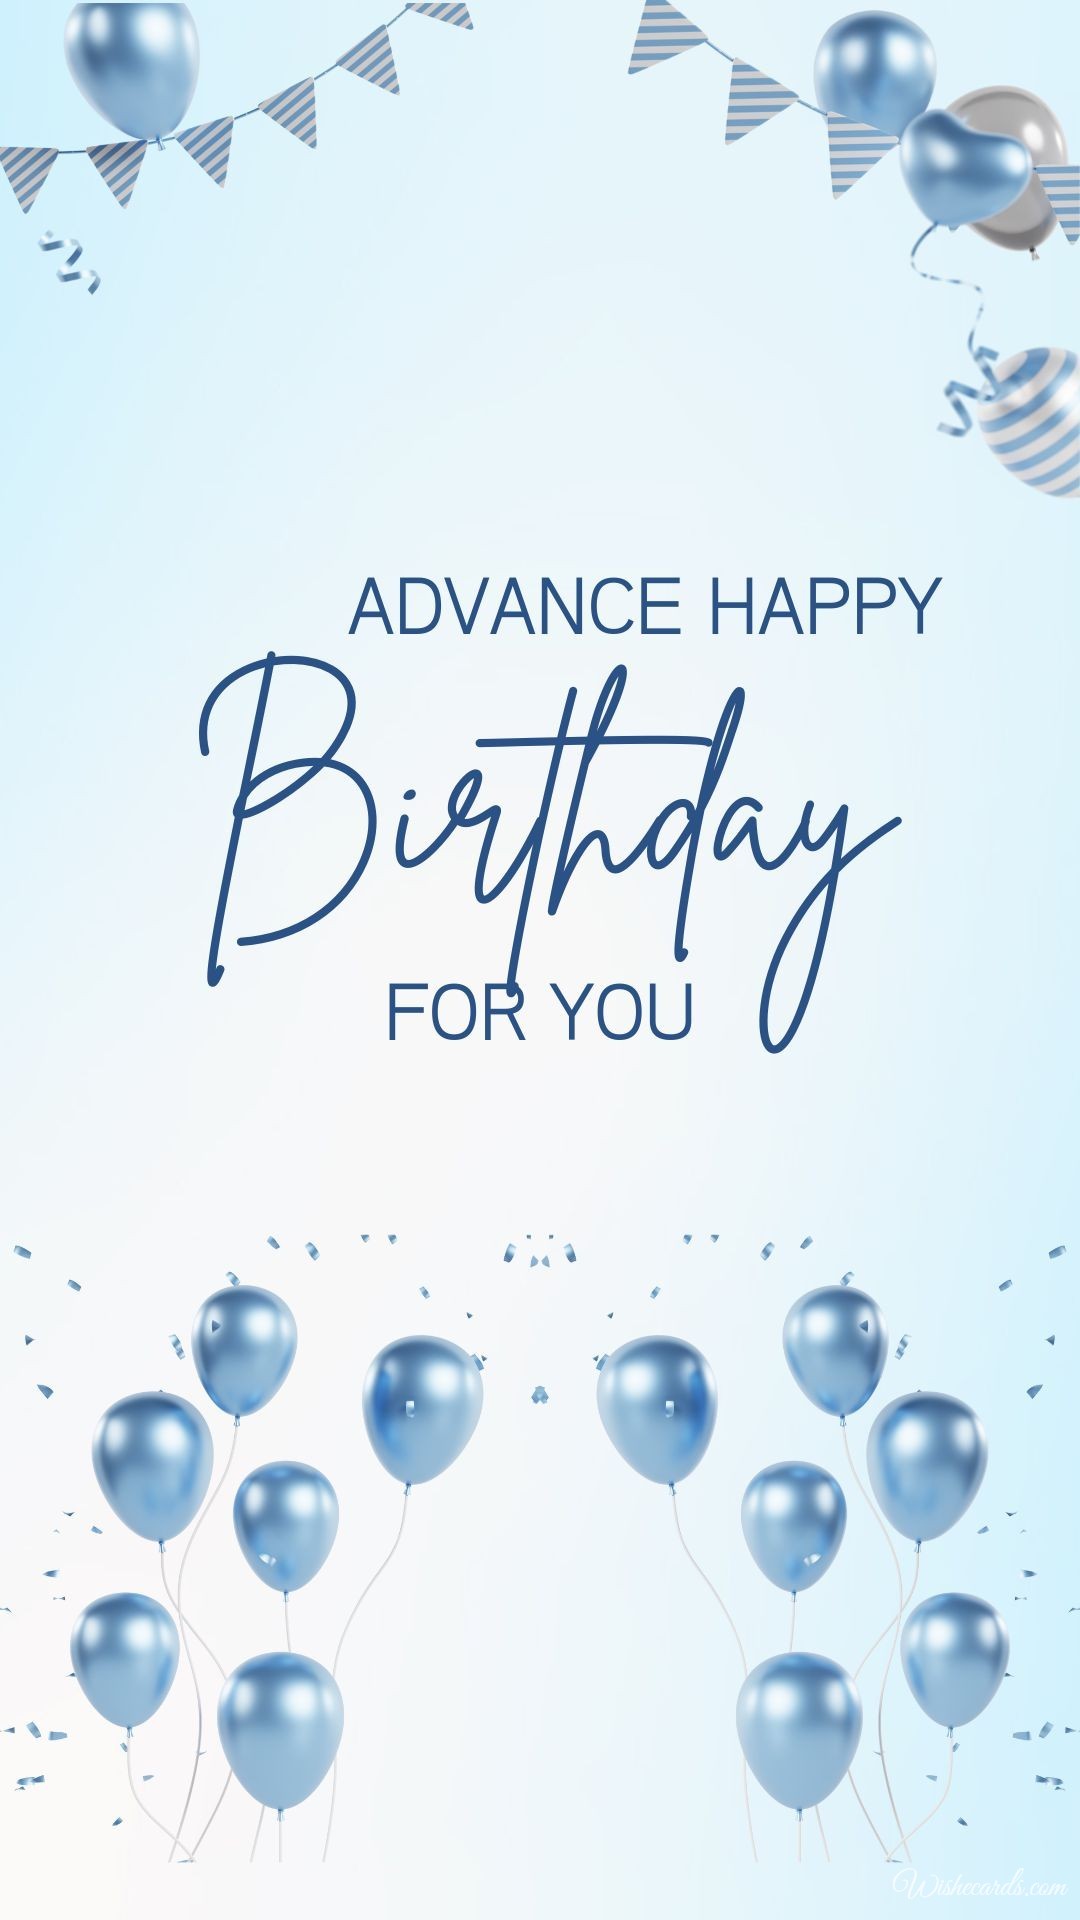 Advance Happy Birthday Image